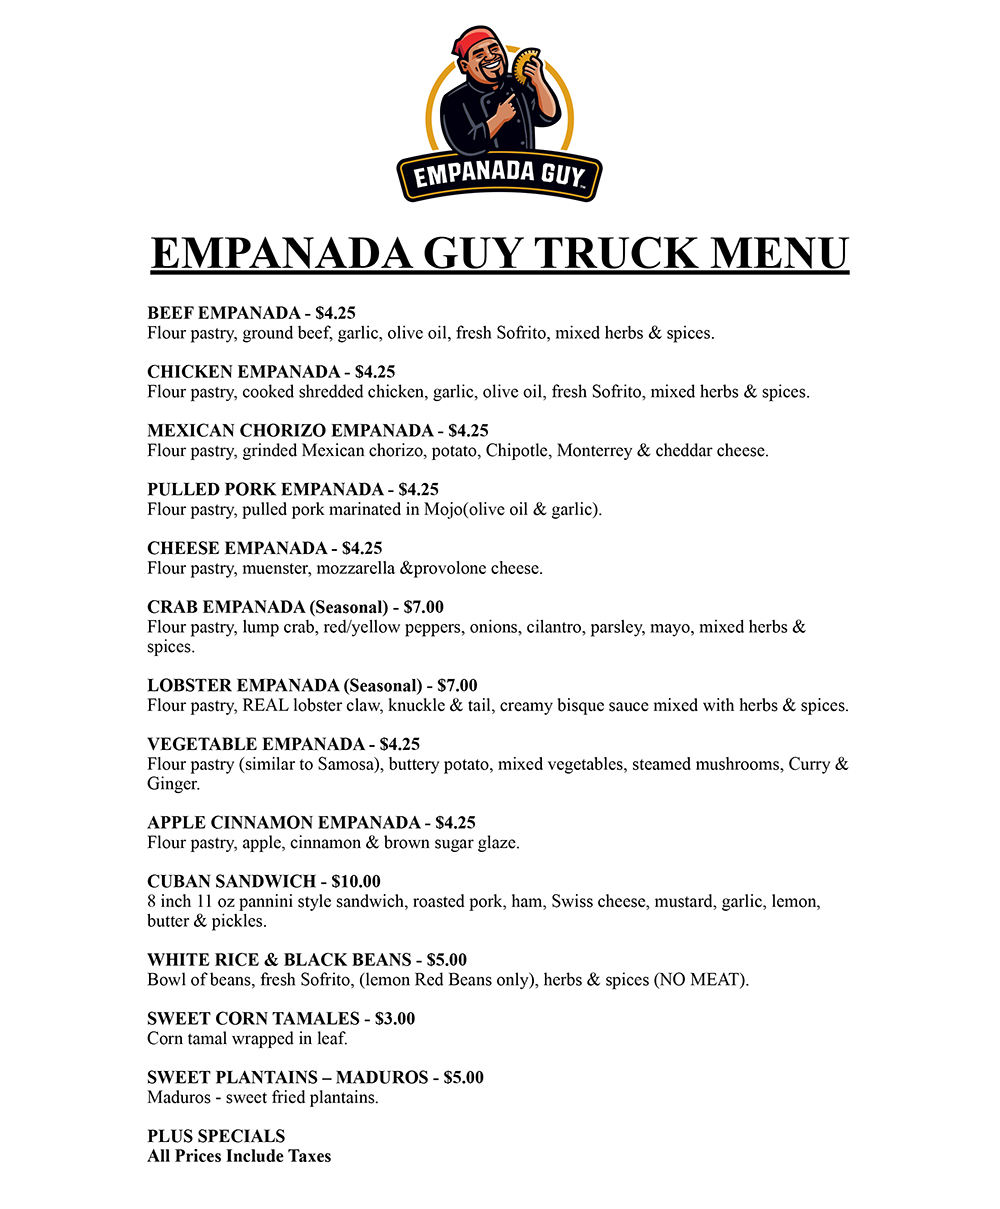 Empanada Guy Menu | Food Trucks On The Move